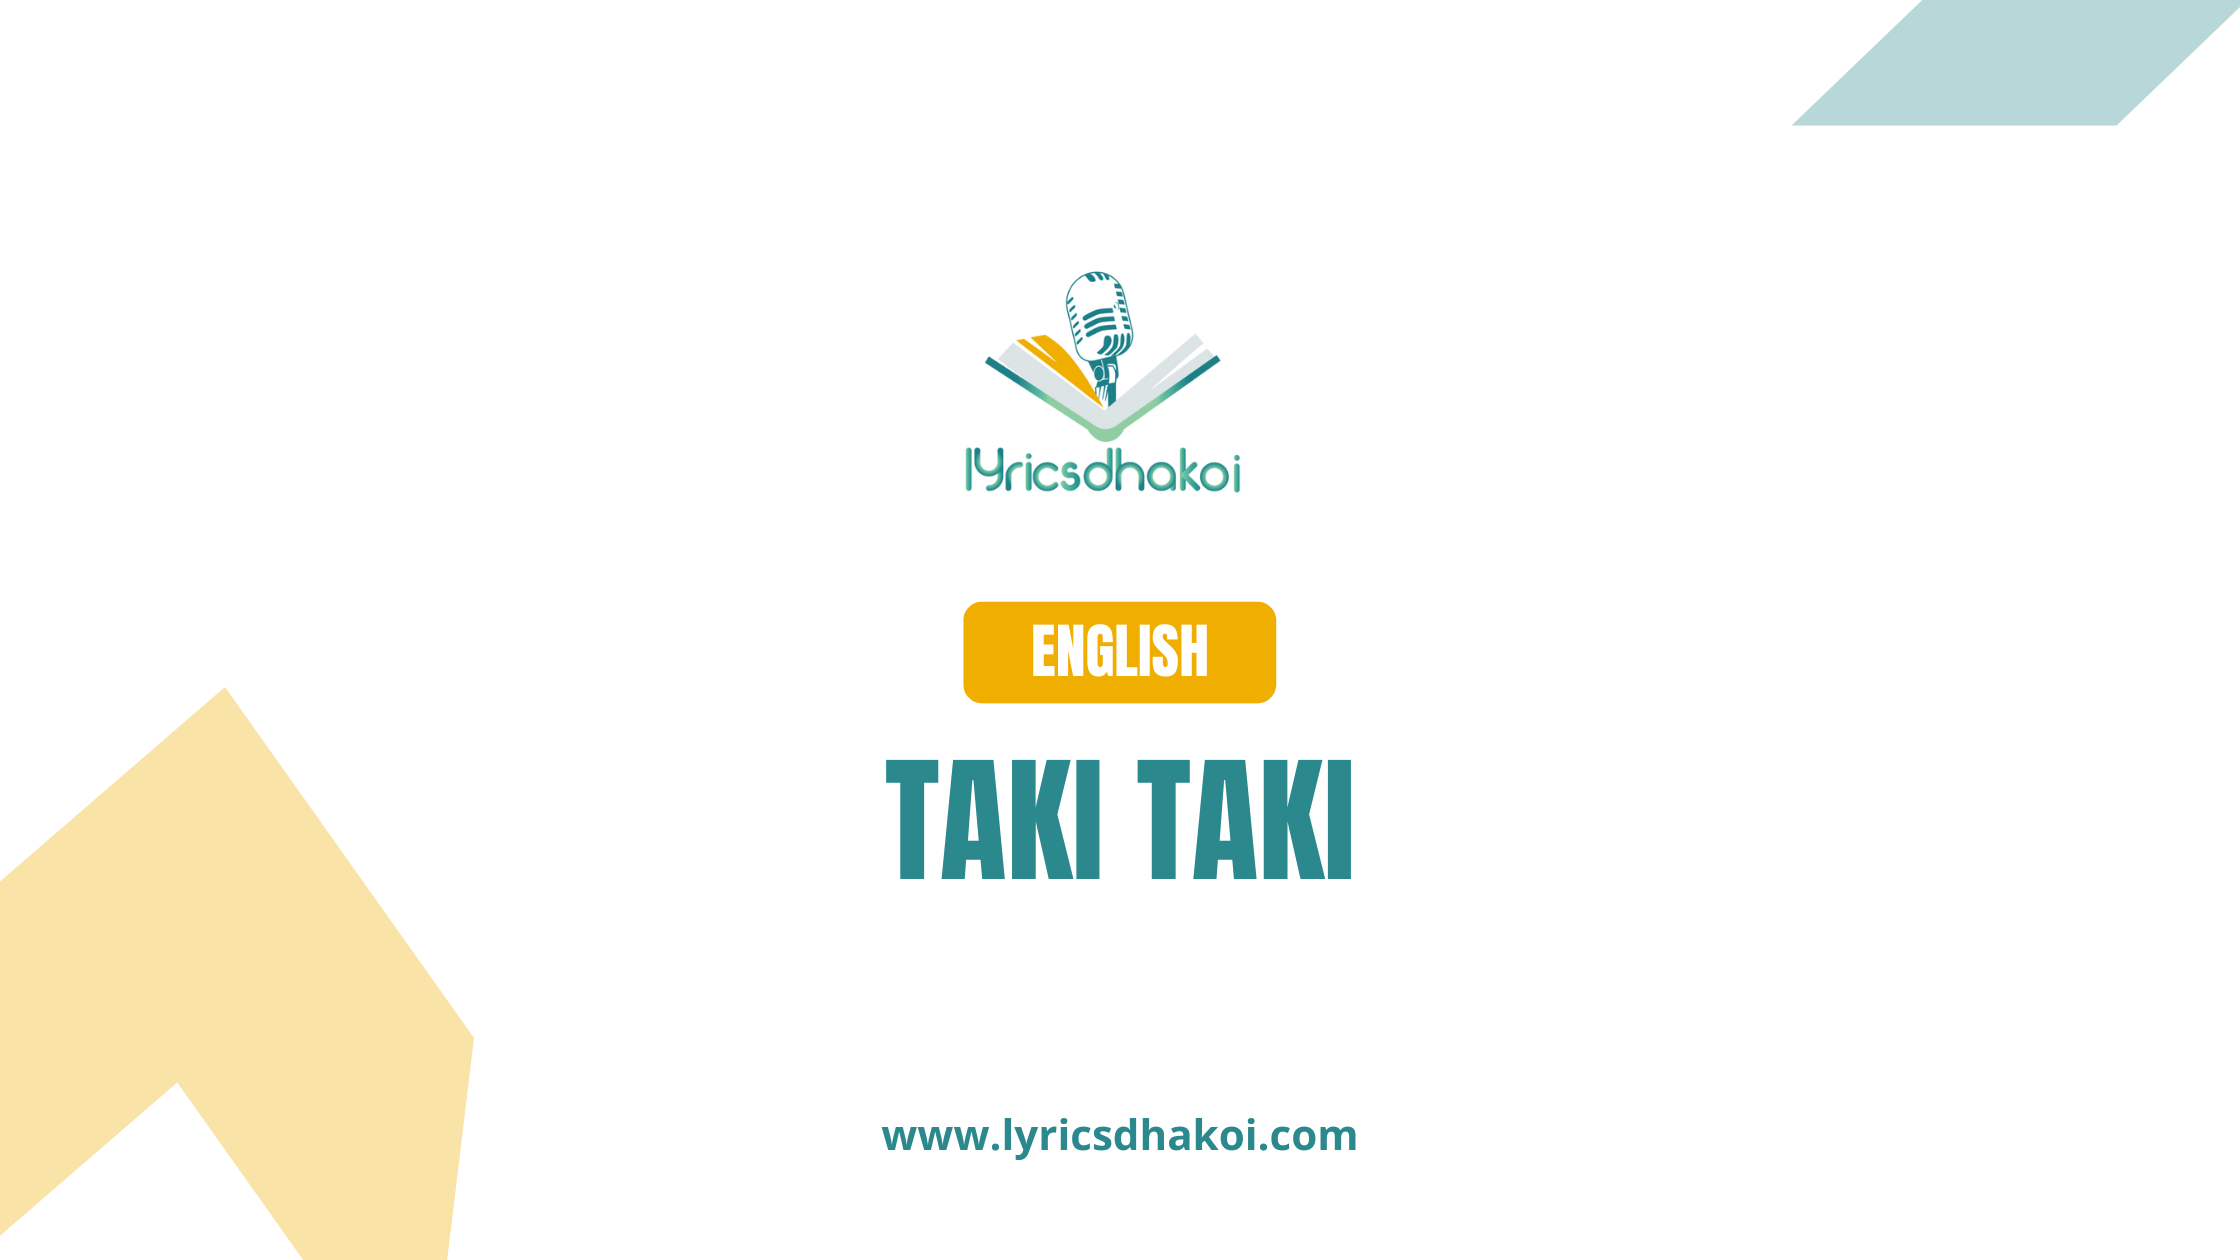 Taki Taki English Lyrics for Karaoke Online - LyricsDhakoi.com